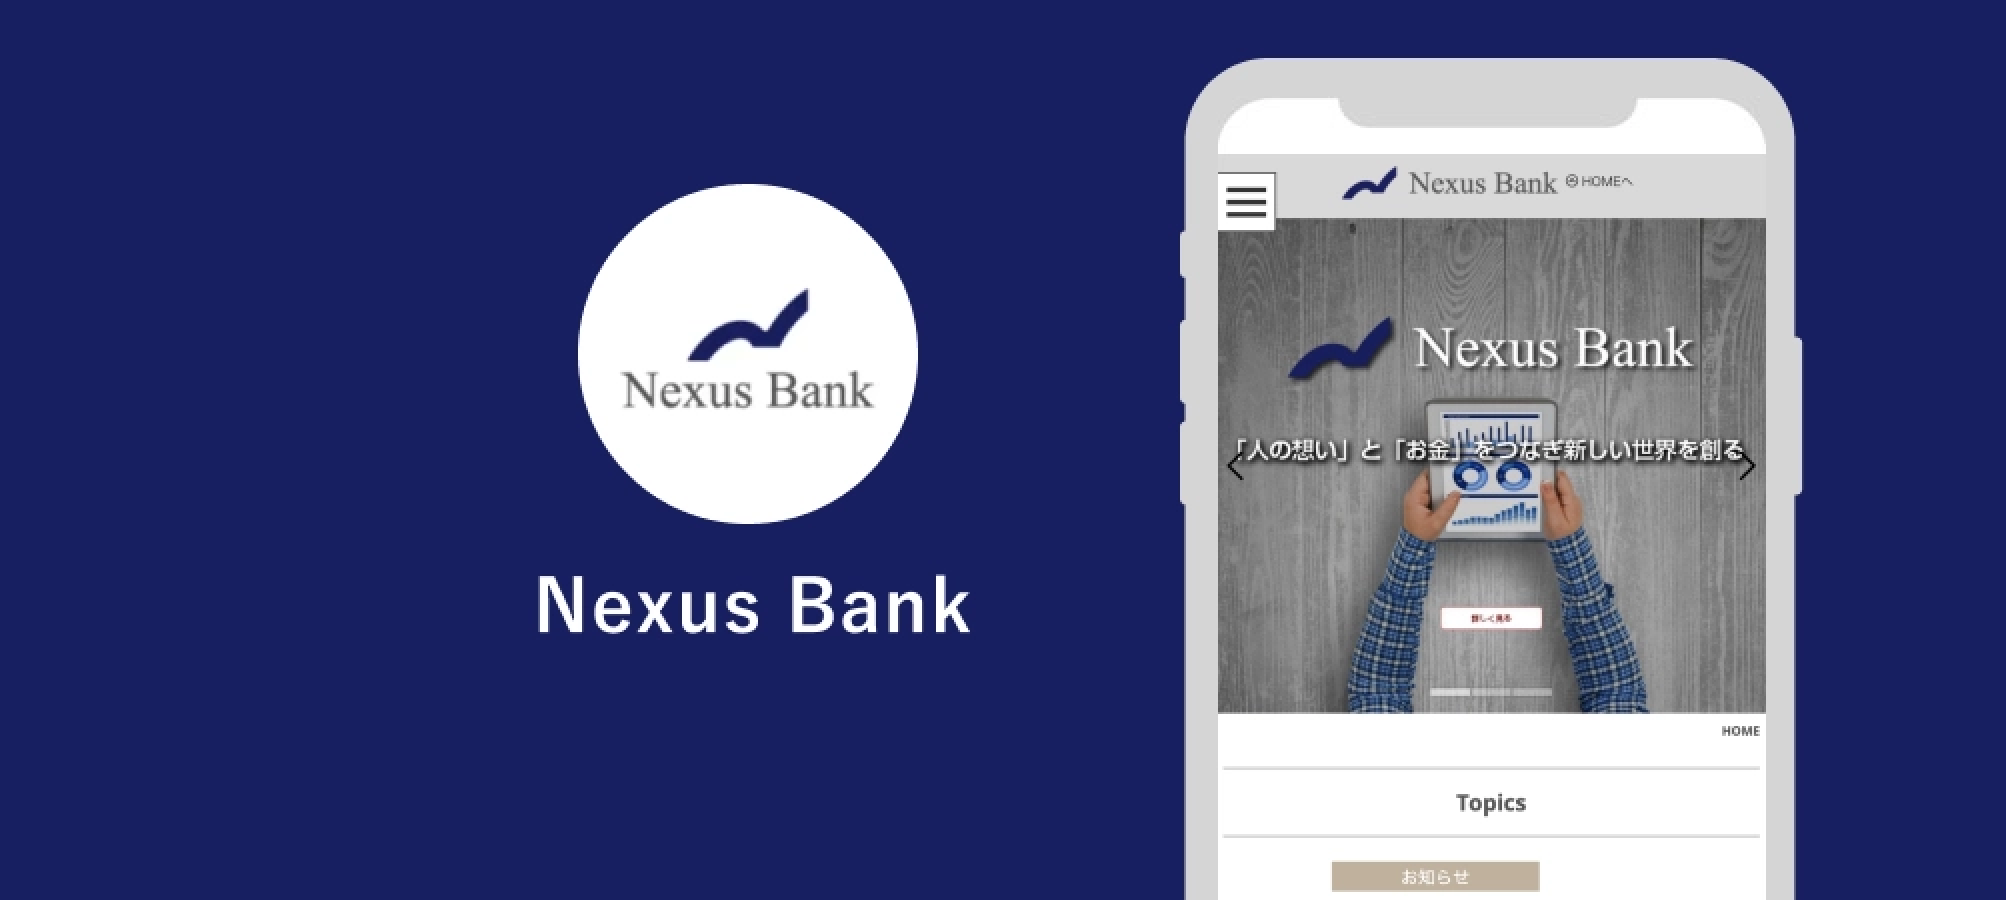 Nexus Bank image